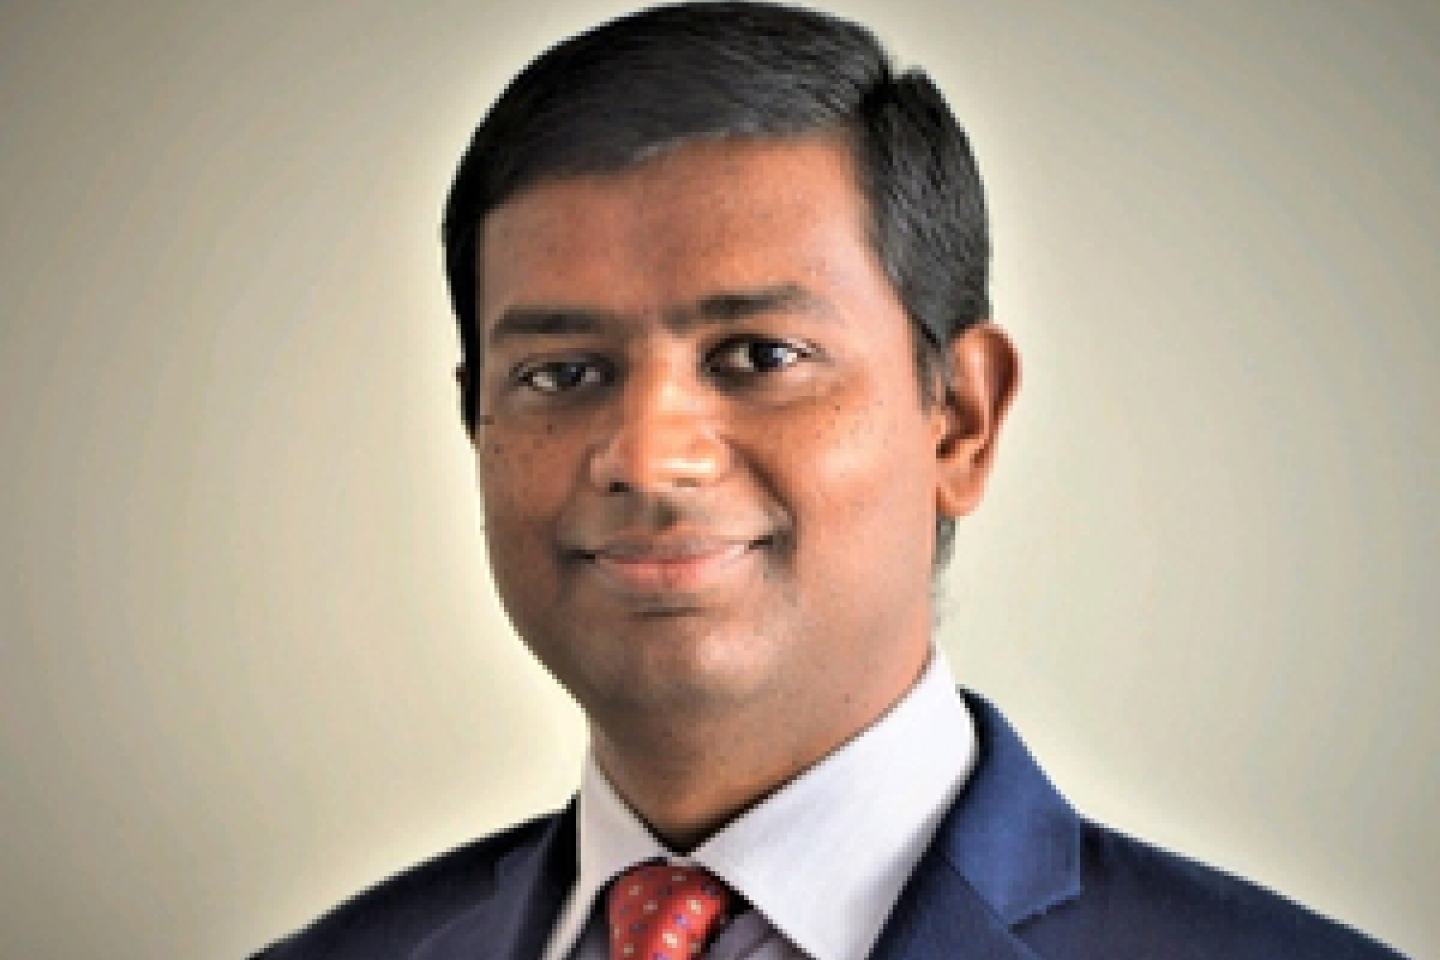 FMC Corporation names Ravi Annavarapu as President of its India business